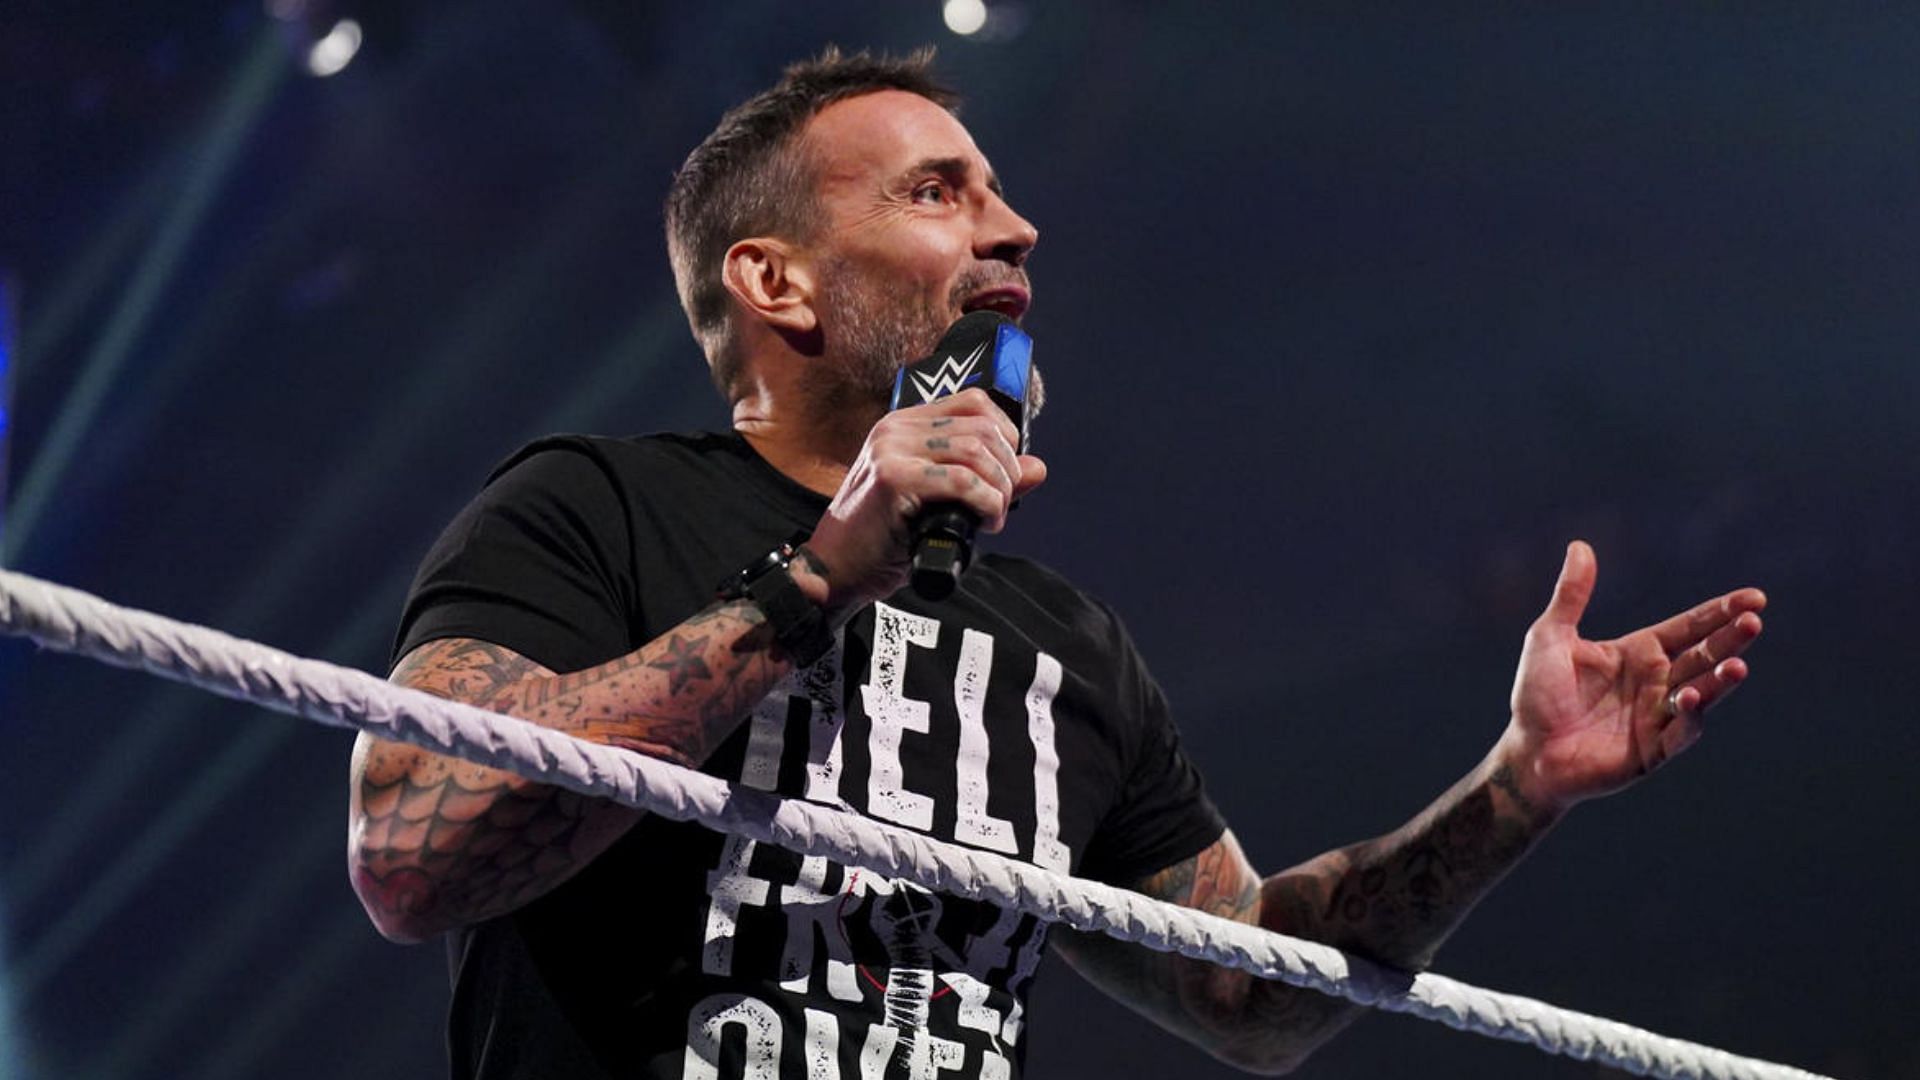 CM Punk is set to return to WWE RAW tonight